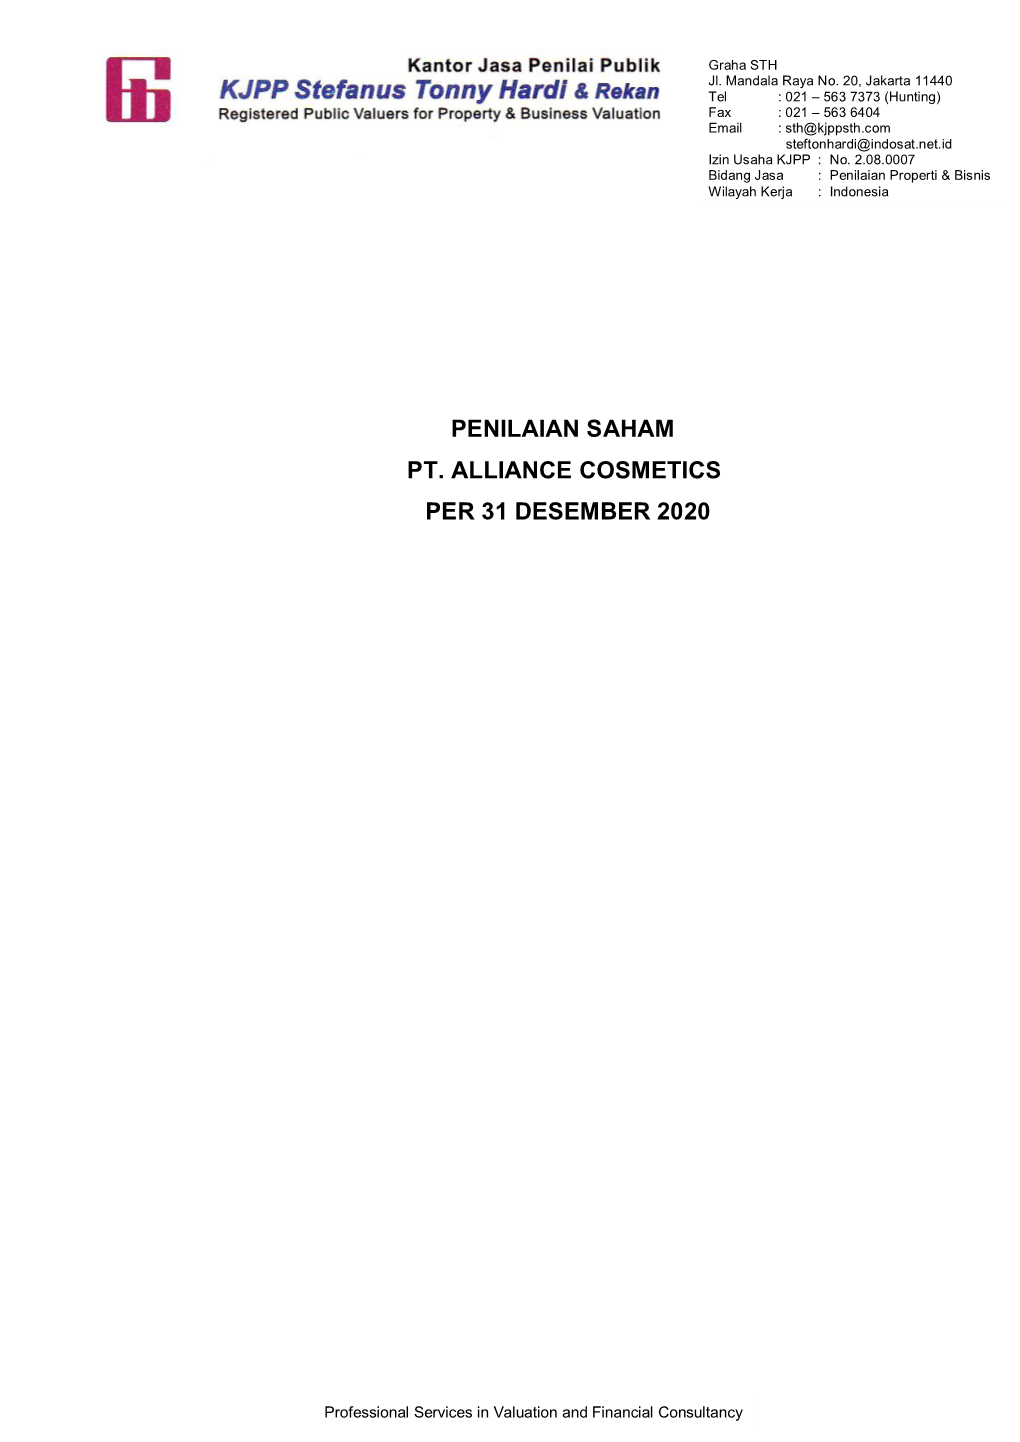 Penilaian Saham Pt. Alliance Cosmetics Per 31 Desember 2020